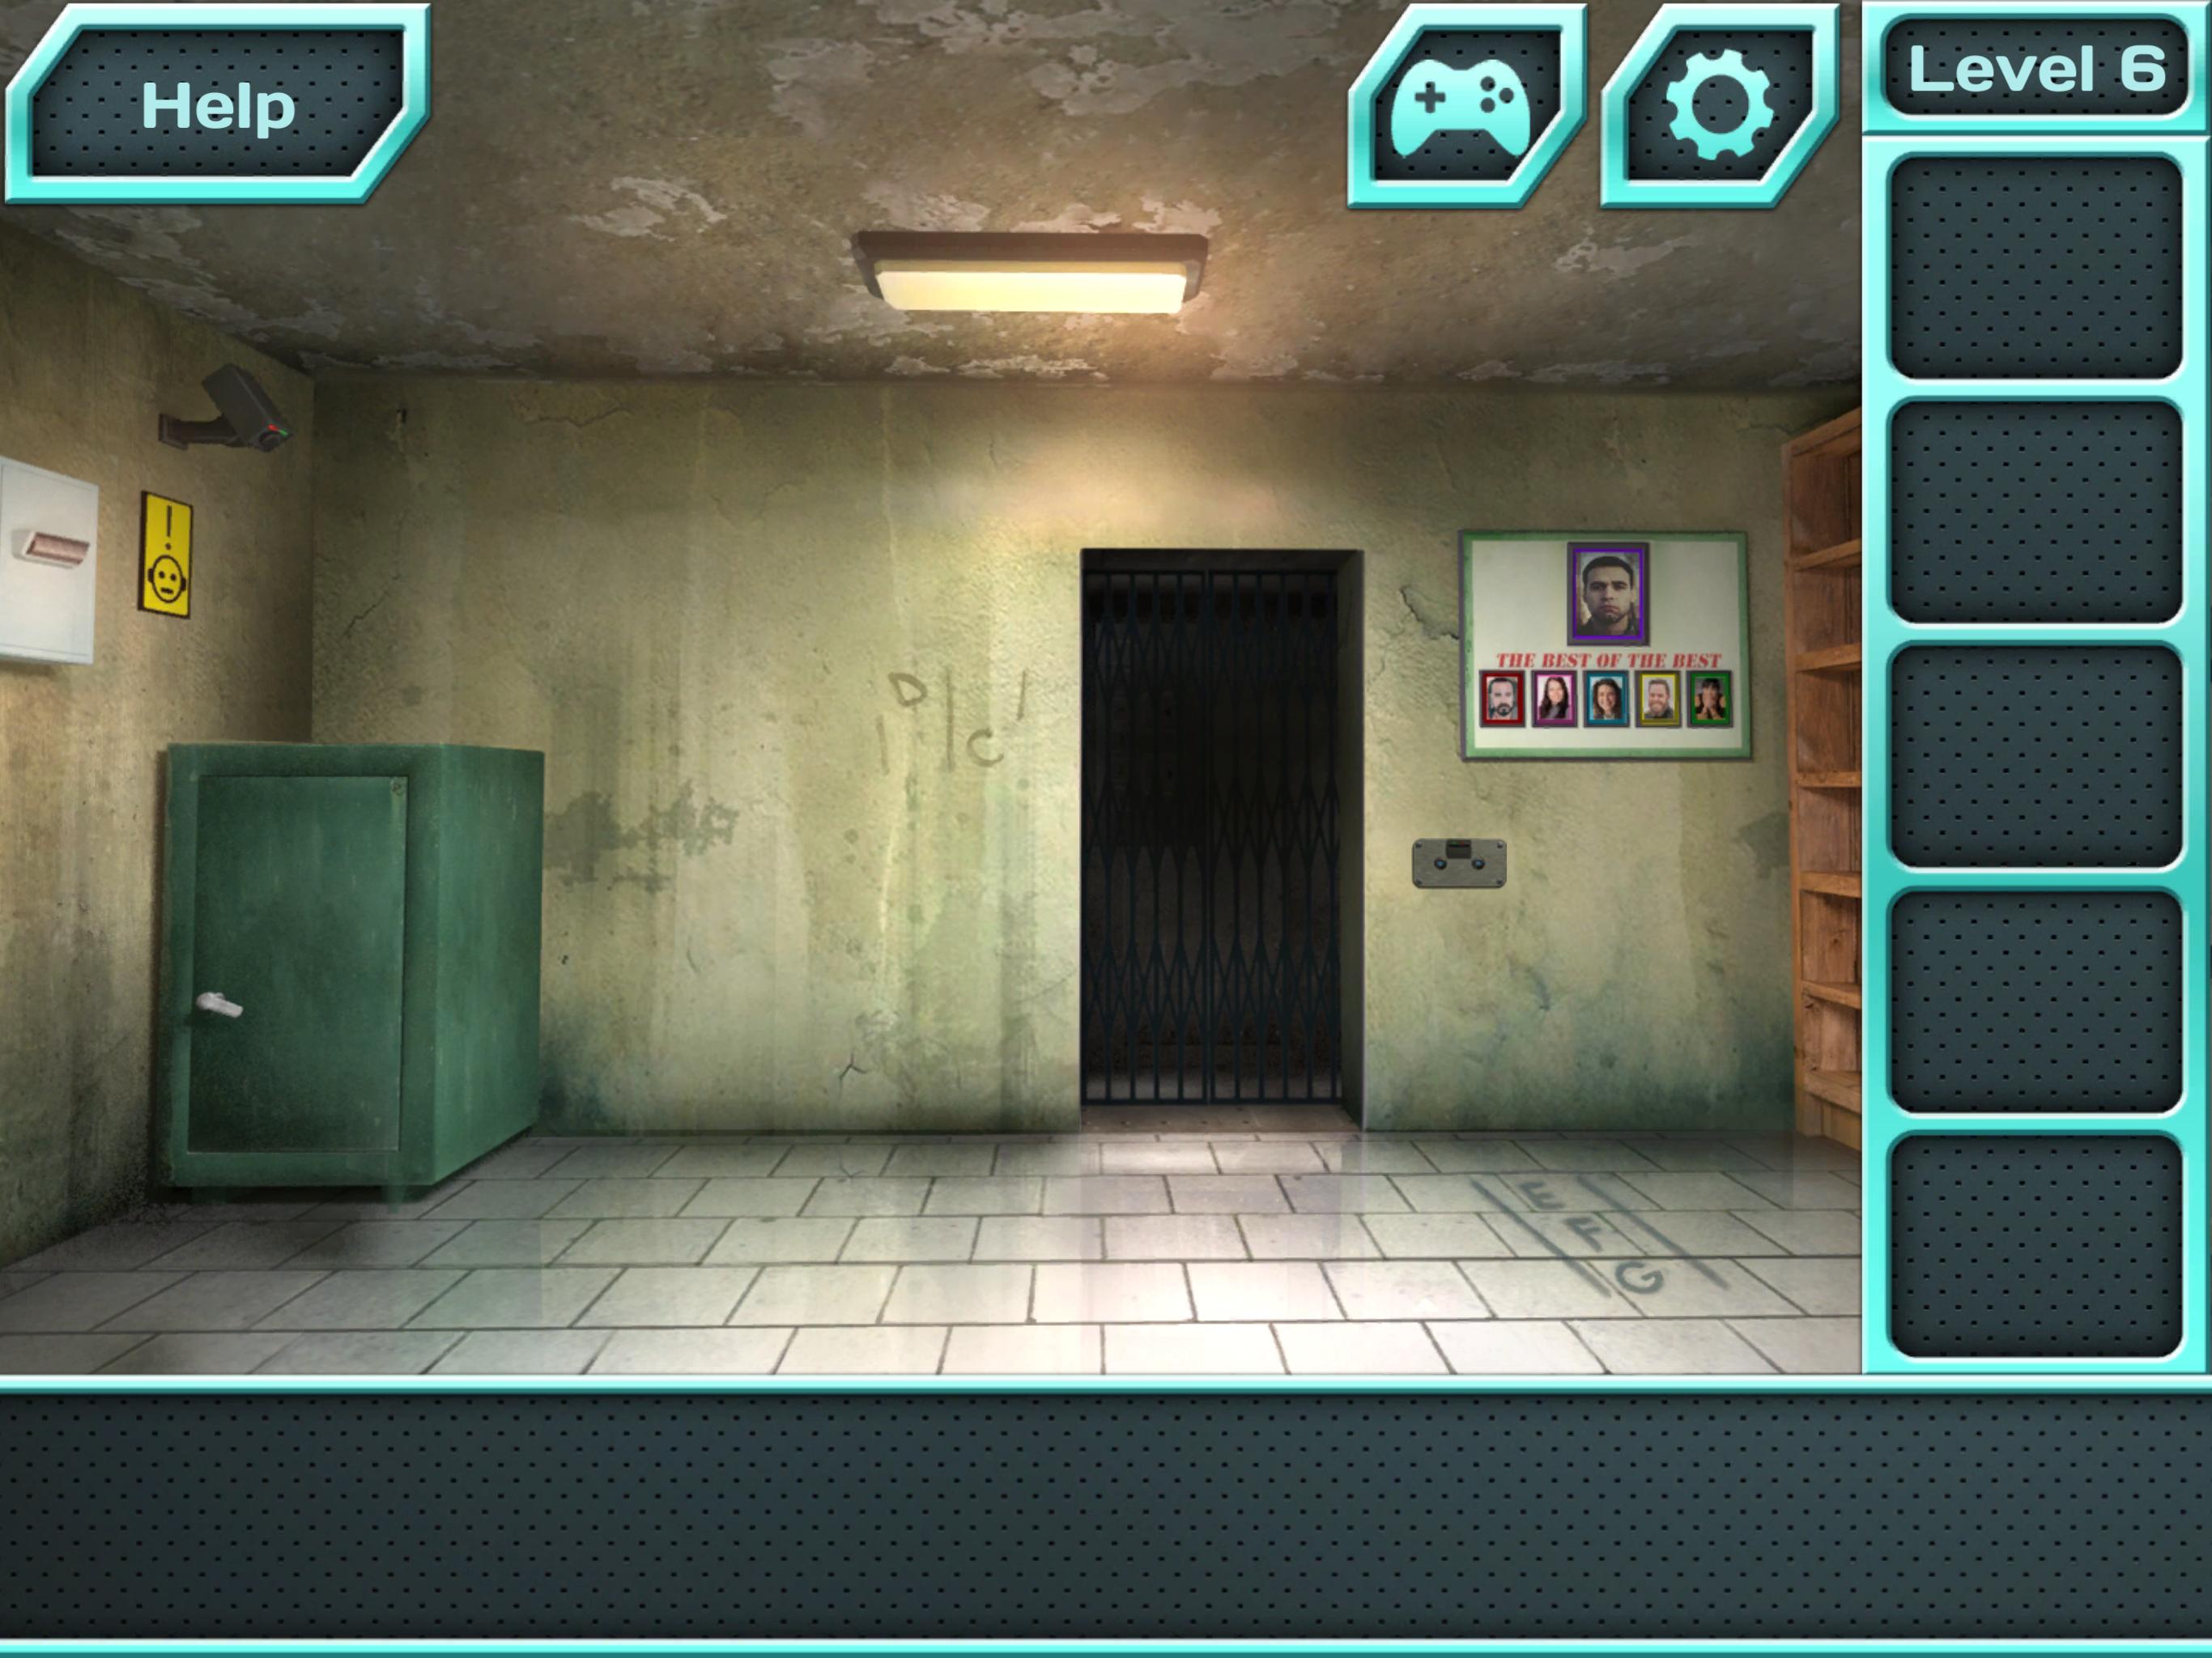 Игра can you Escape. Андроид can you Escape 6. Prison Escape 15 лифт. Головоломка can you Escape 6 Level.